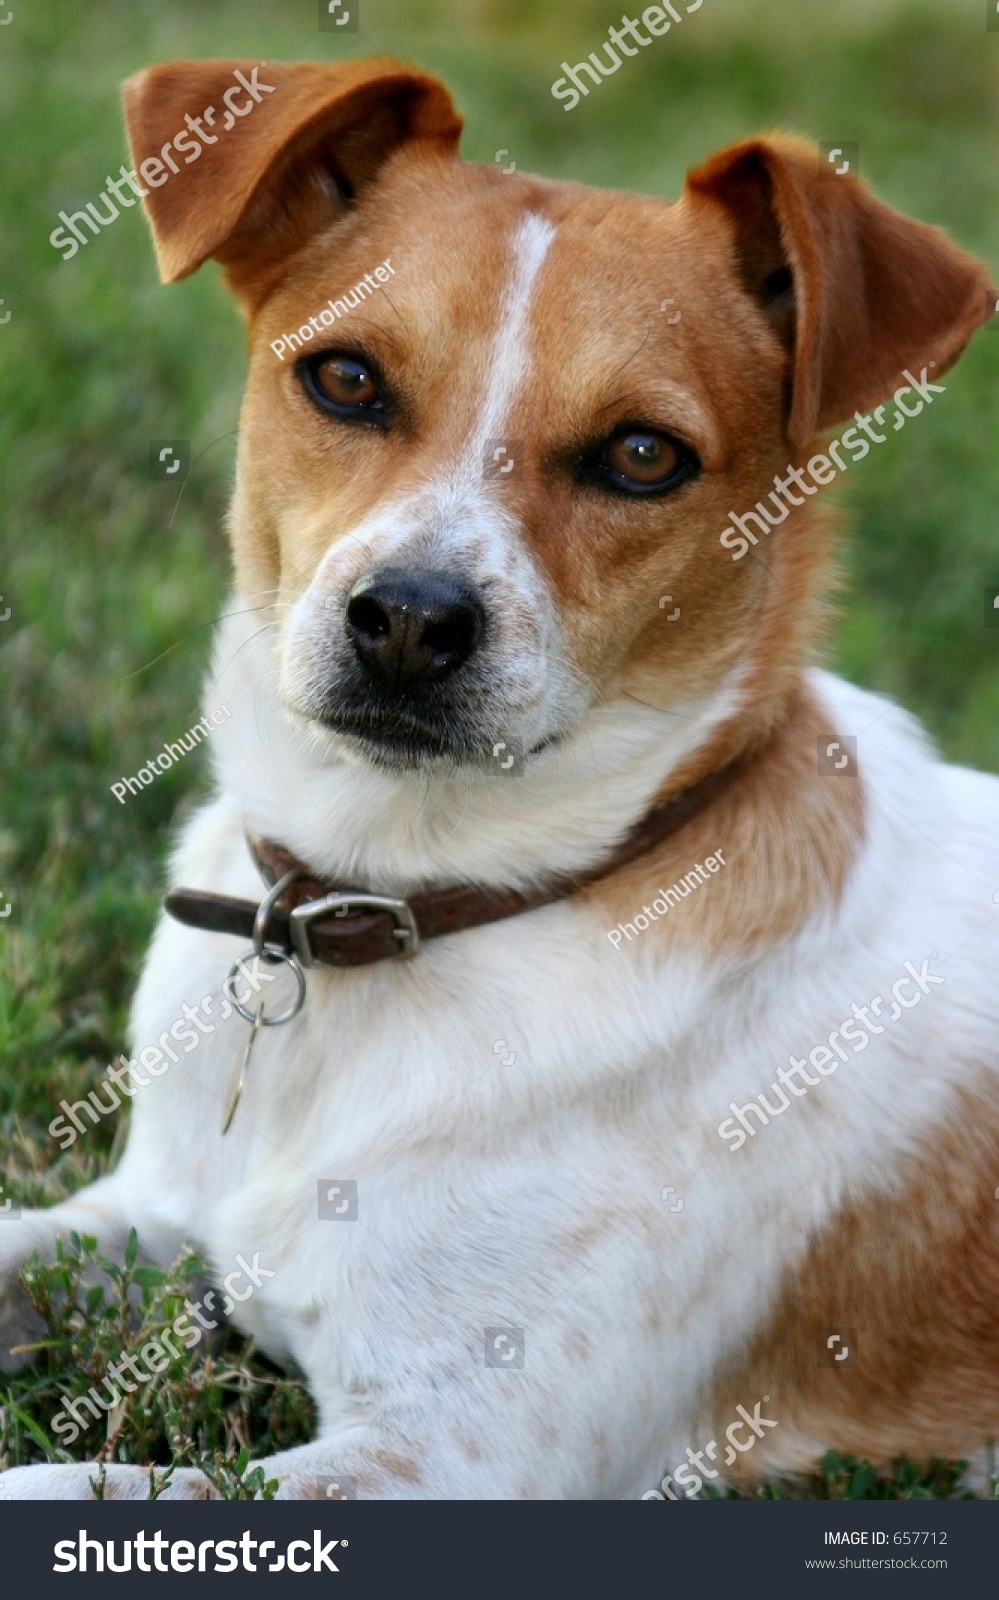 Small Brown White Dog Stock Photo 657712 Shutterstock